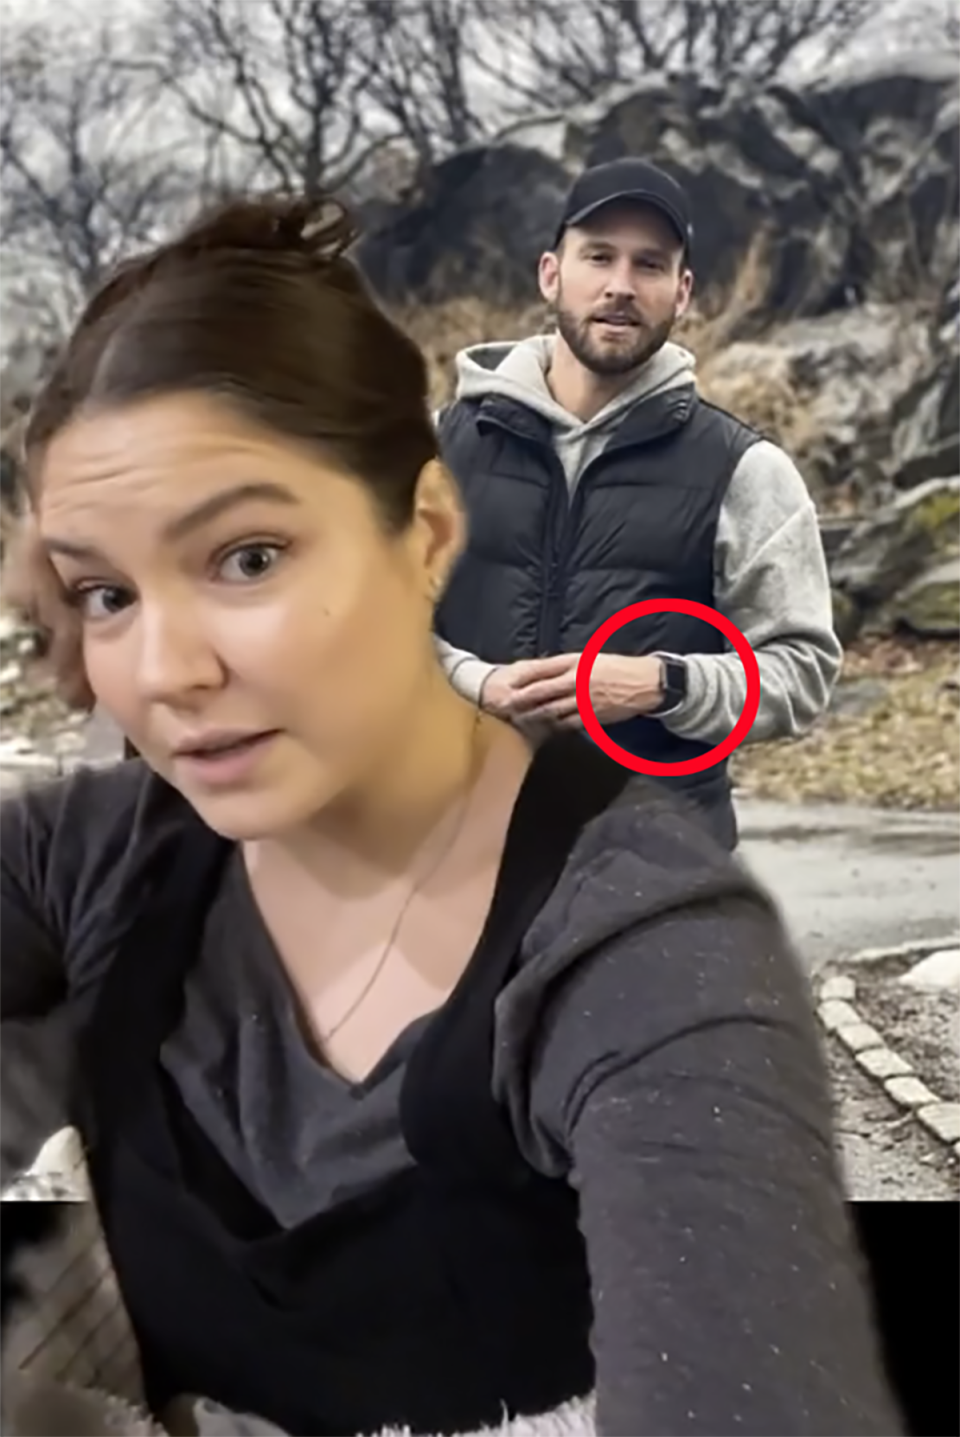 TikTok user showing man with Apple Watch